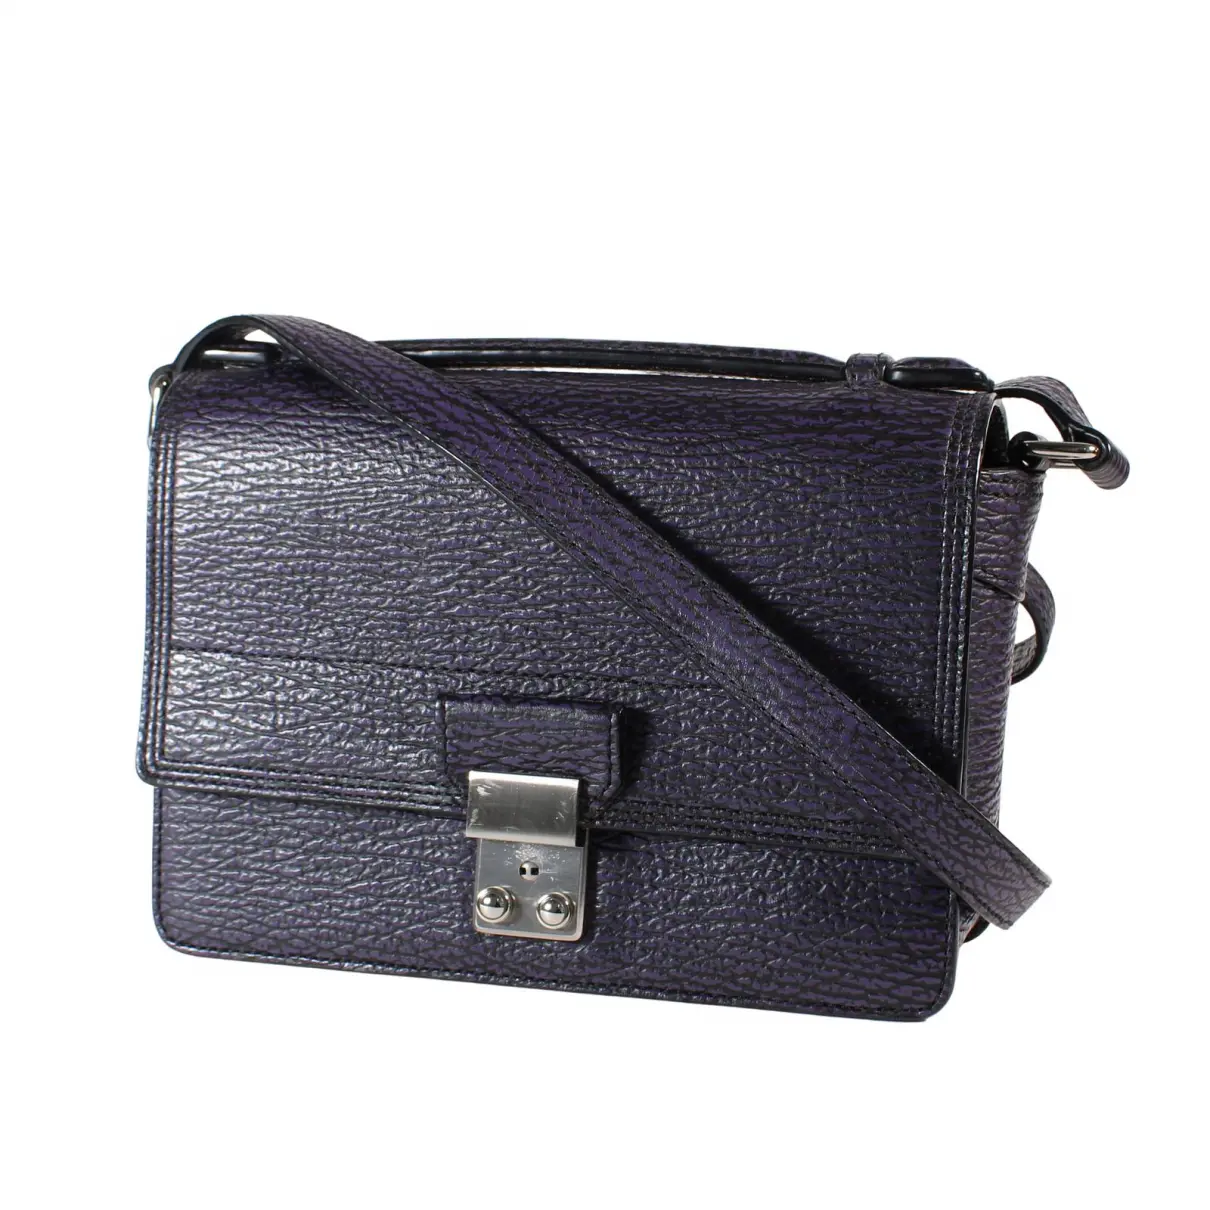 Buy 3.1 Phillip Lim Leather crossbody bag online